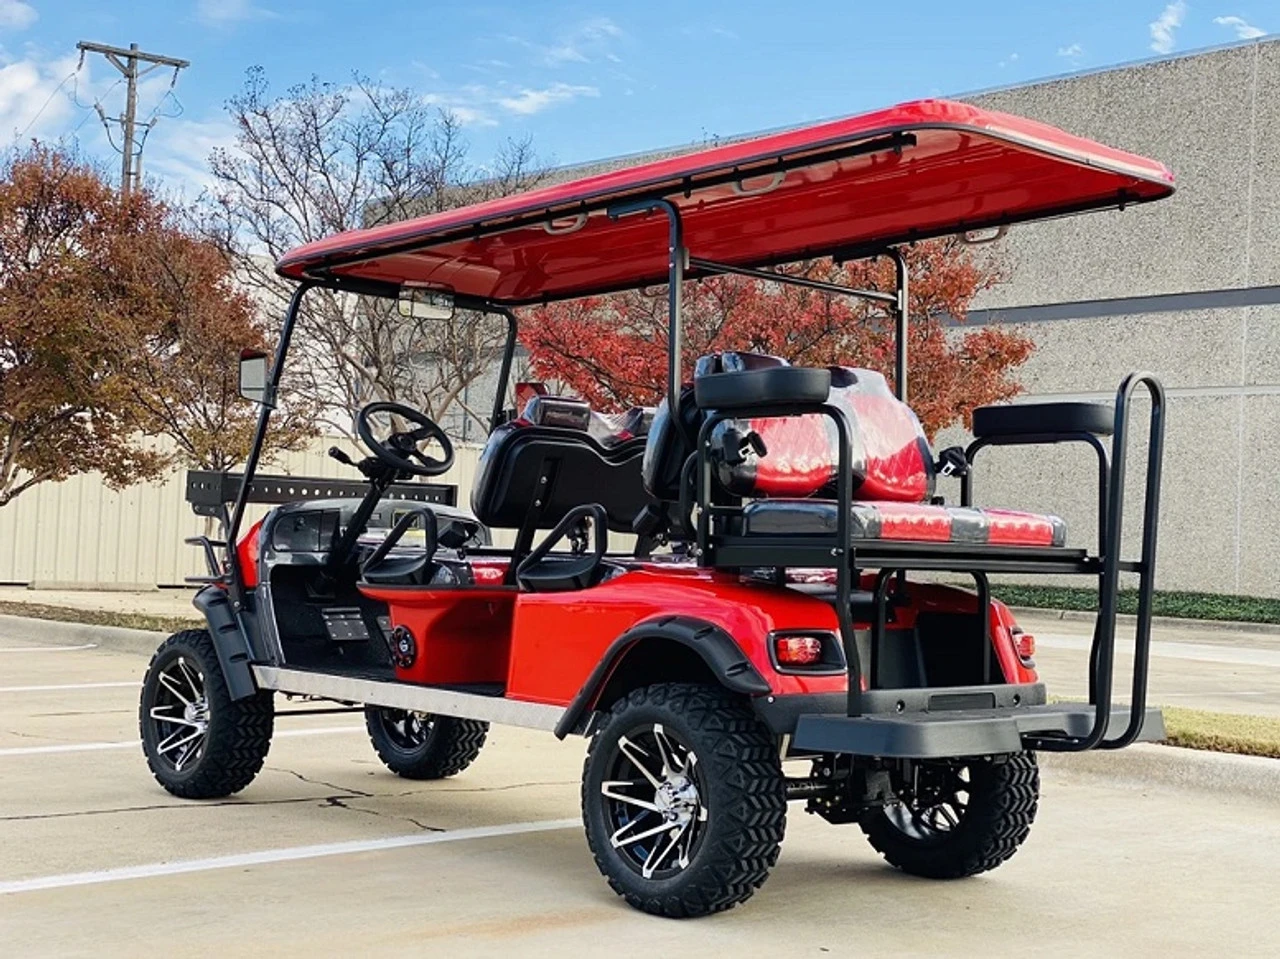 yamaha golf cart accessories